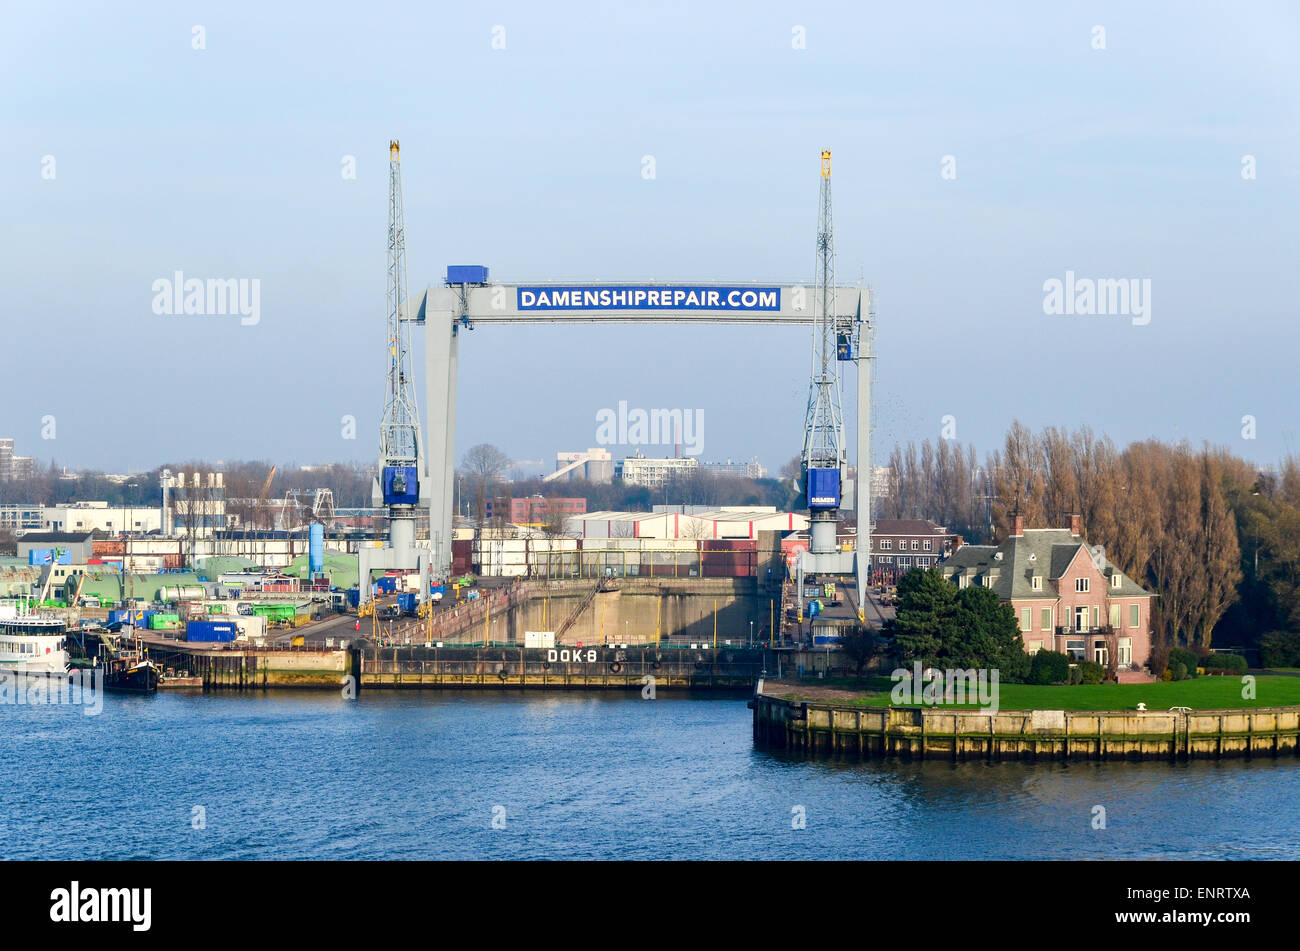 Damen ship repair shipyard, port of Rotterdam, Netherlands Stock Photo